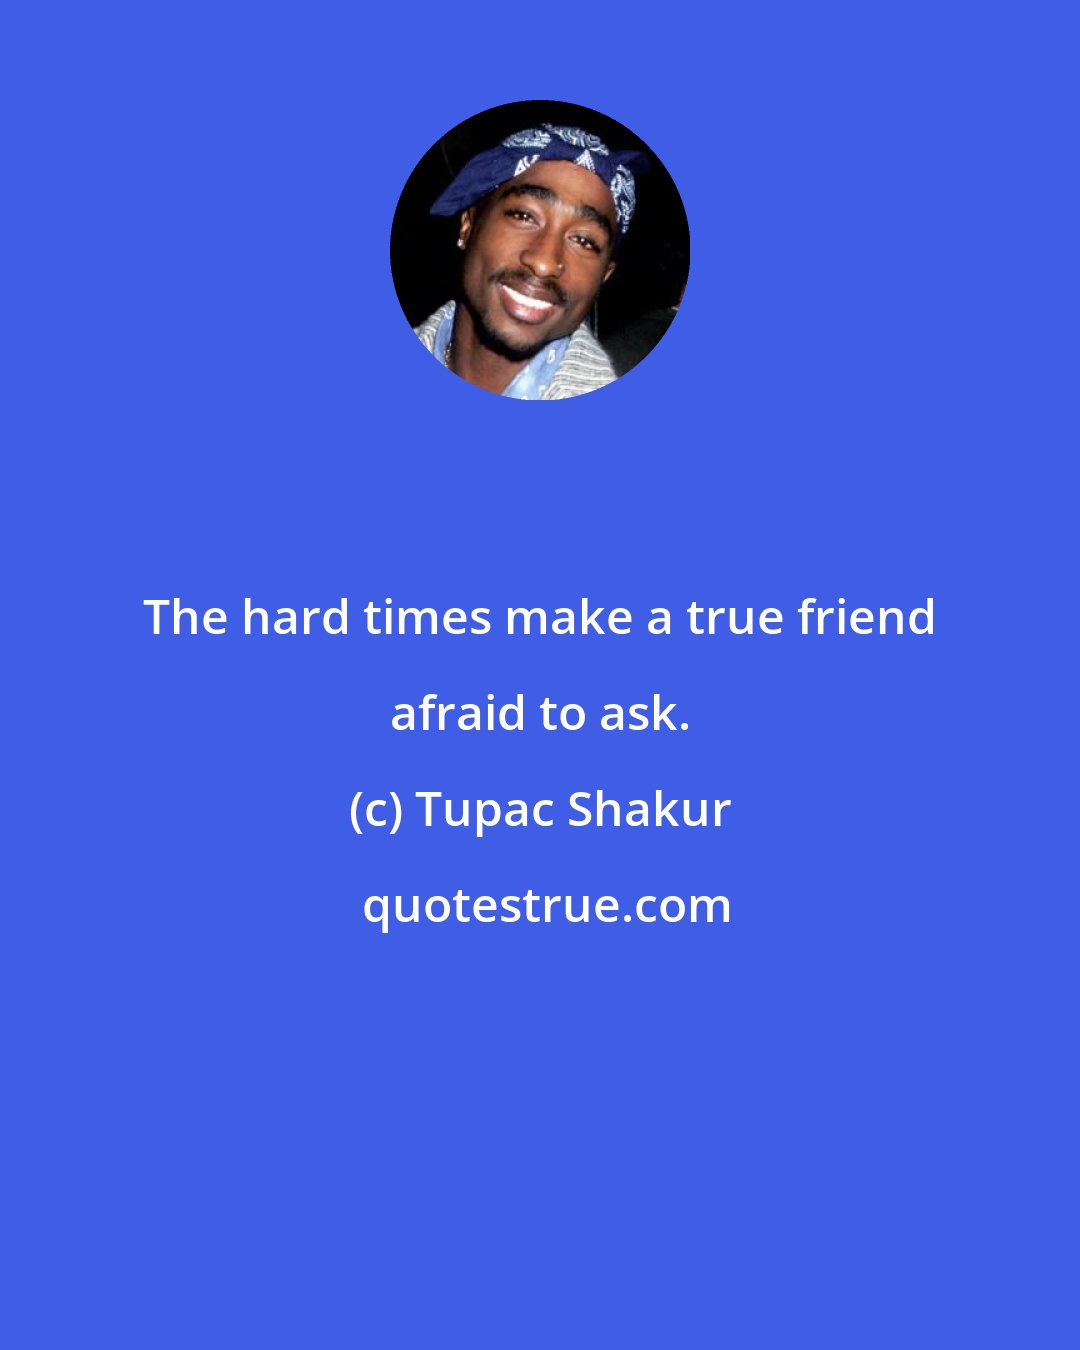 Tupac Shakur: The hard times make a true friend afraid to ask.